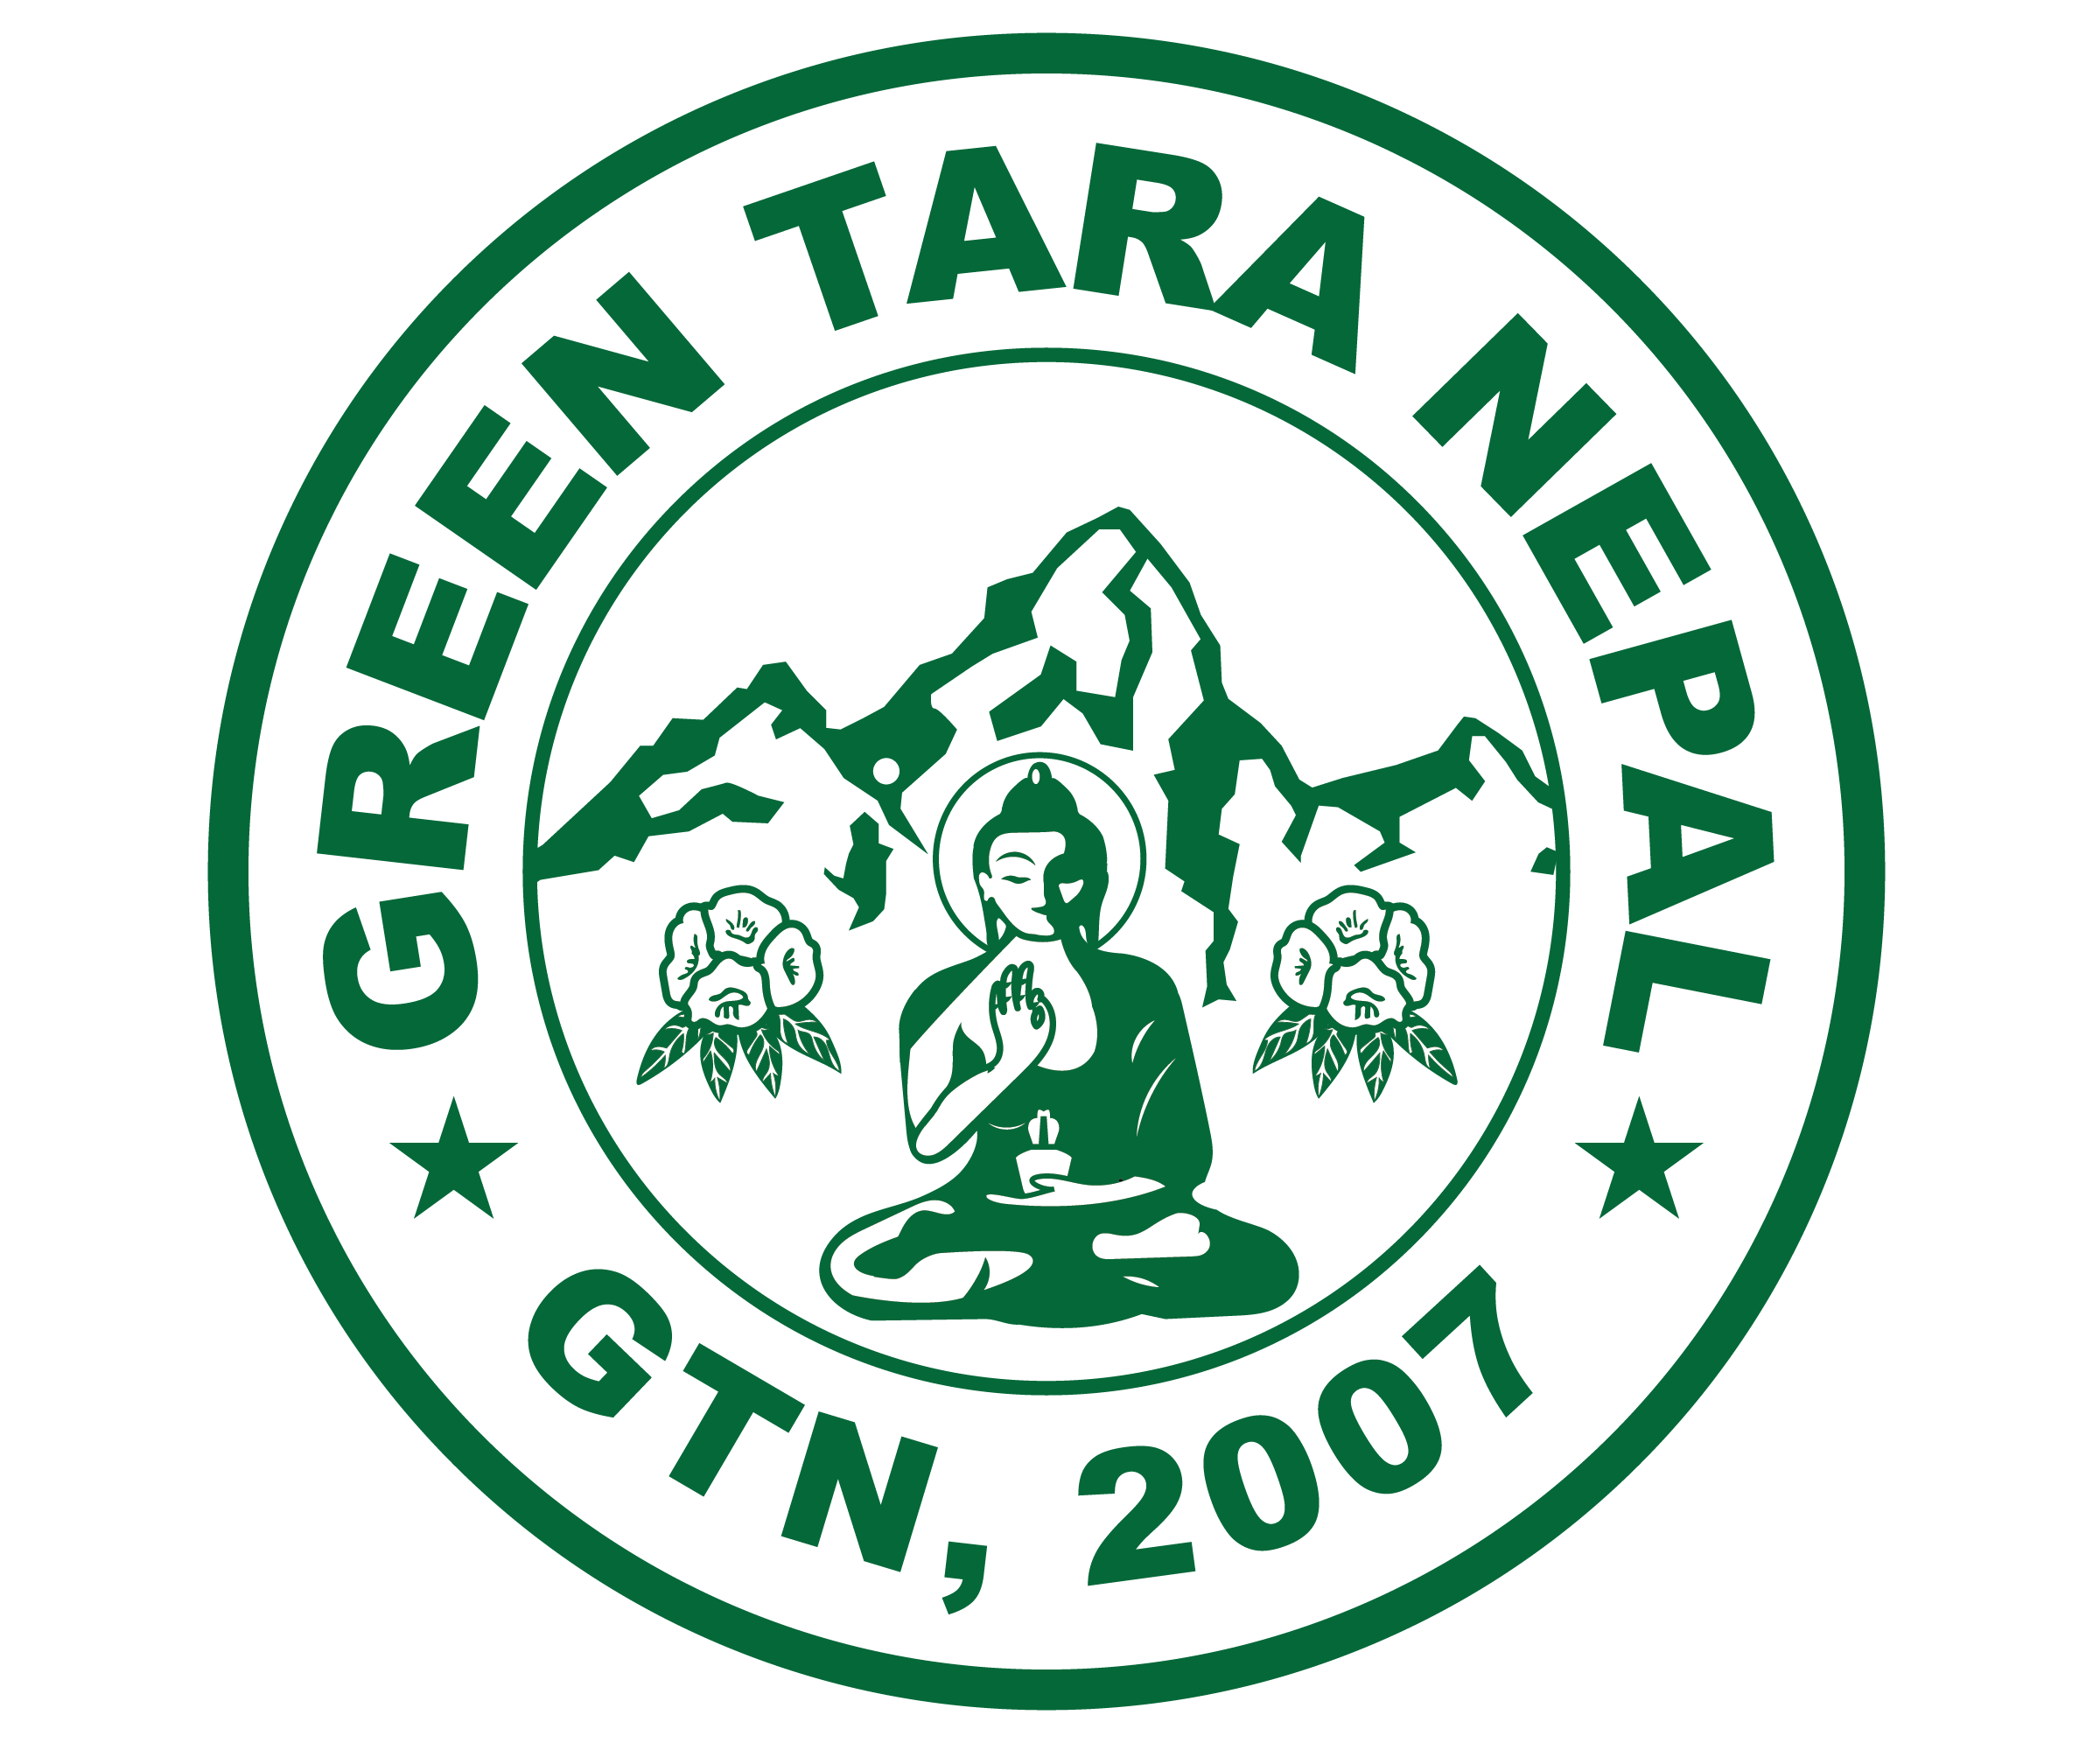 Green Tara Nepal logo